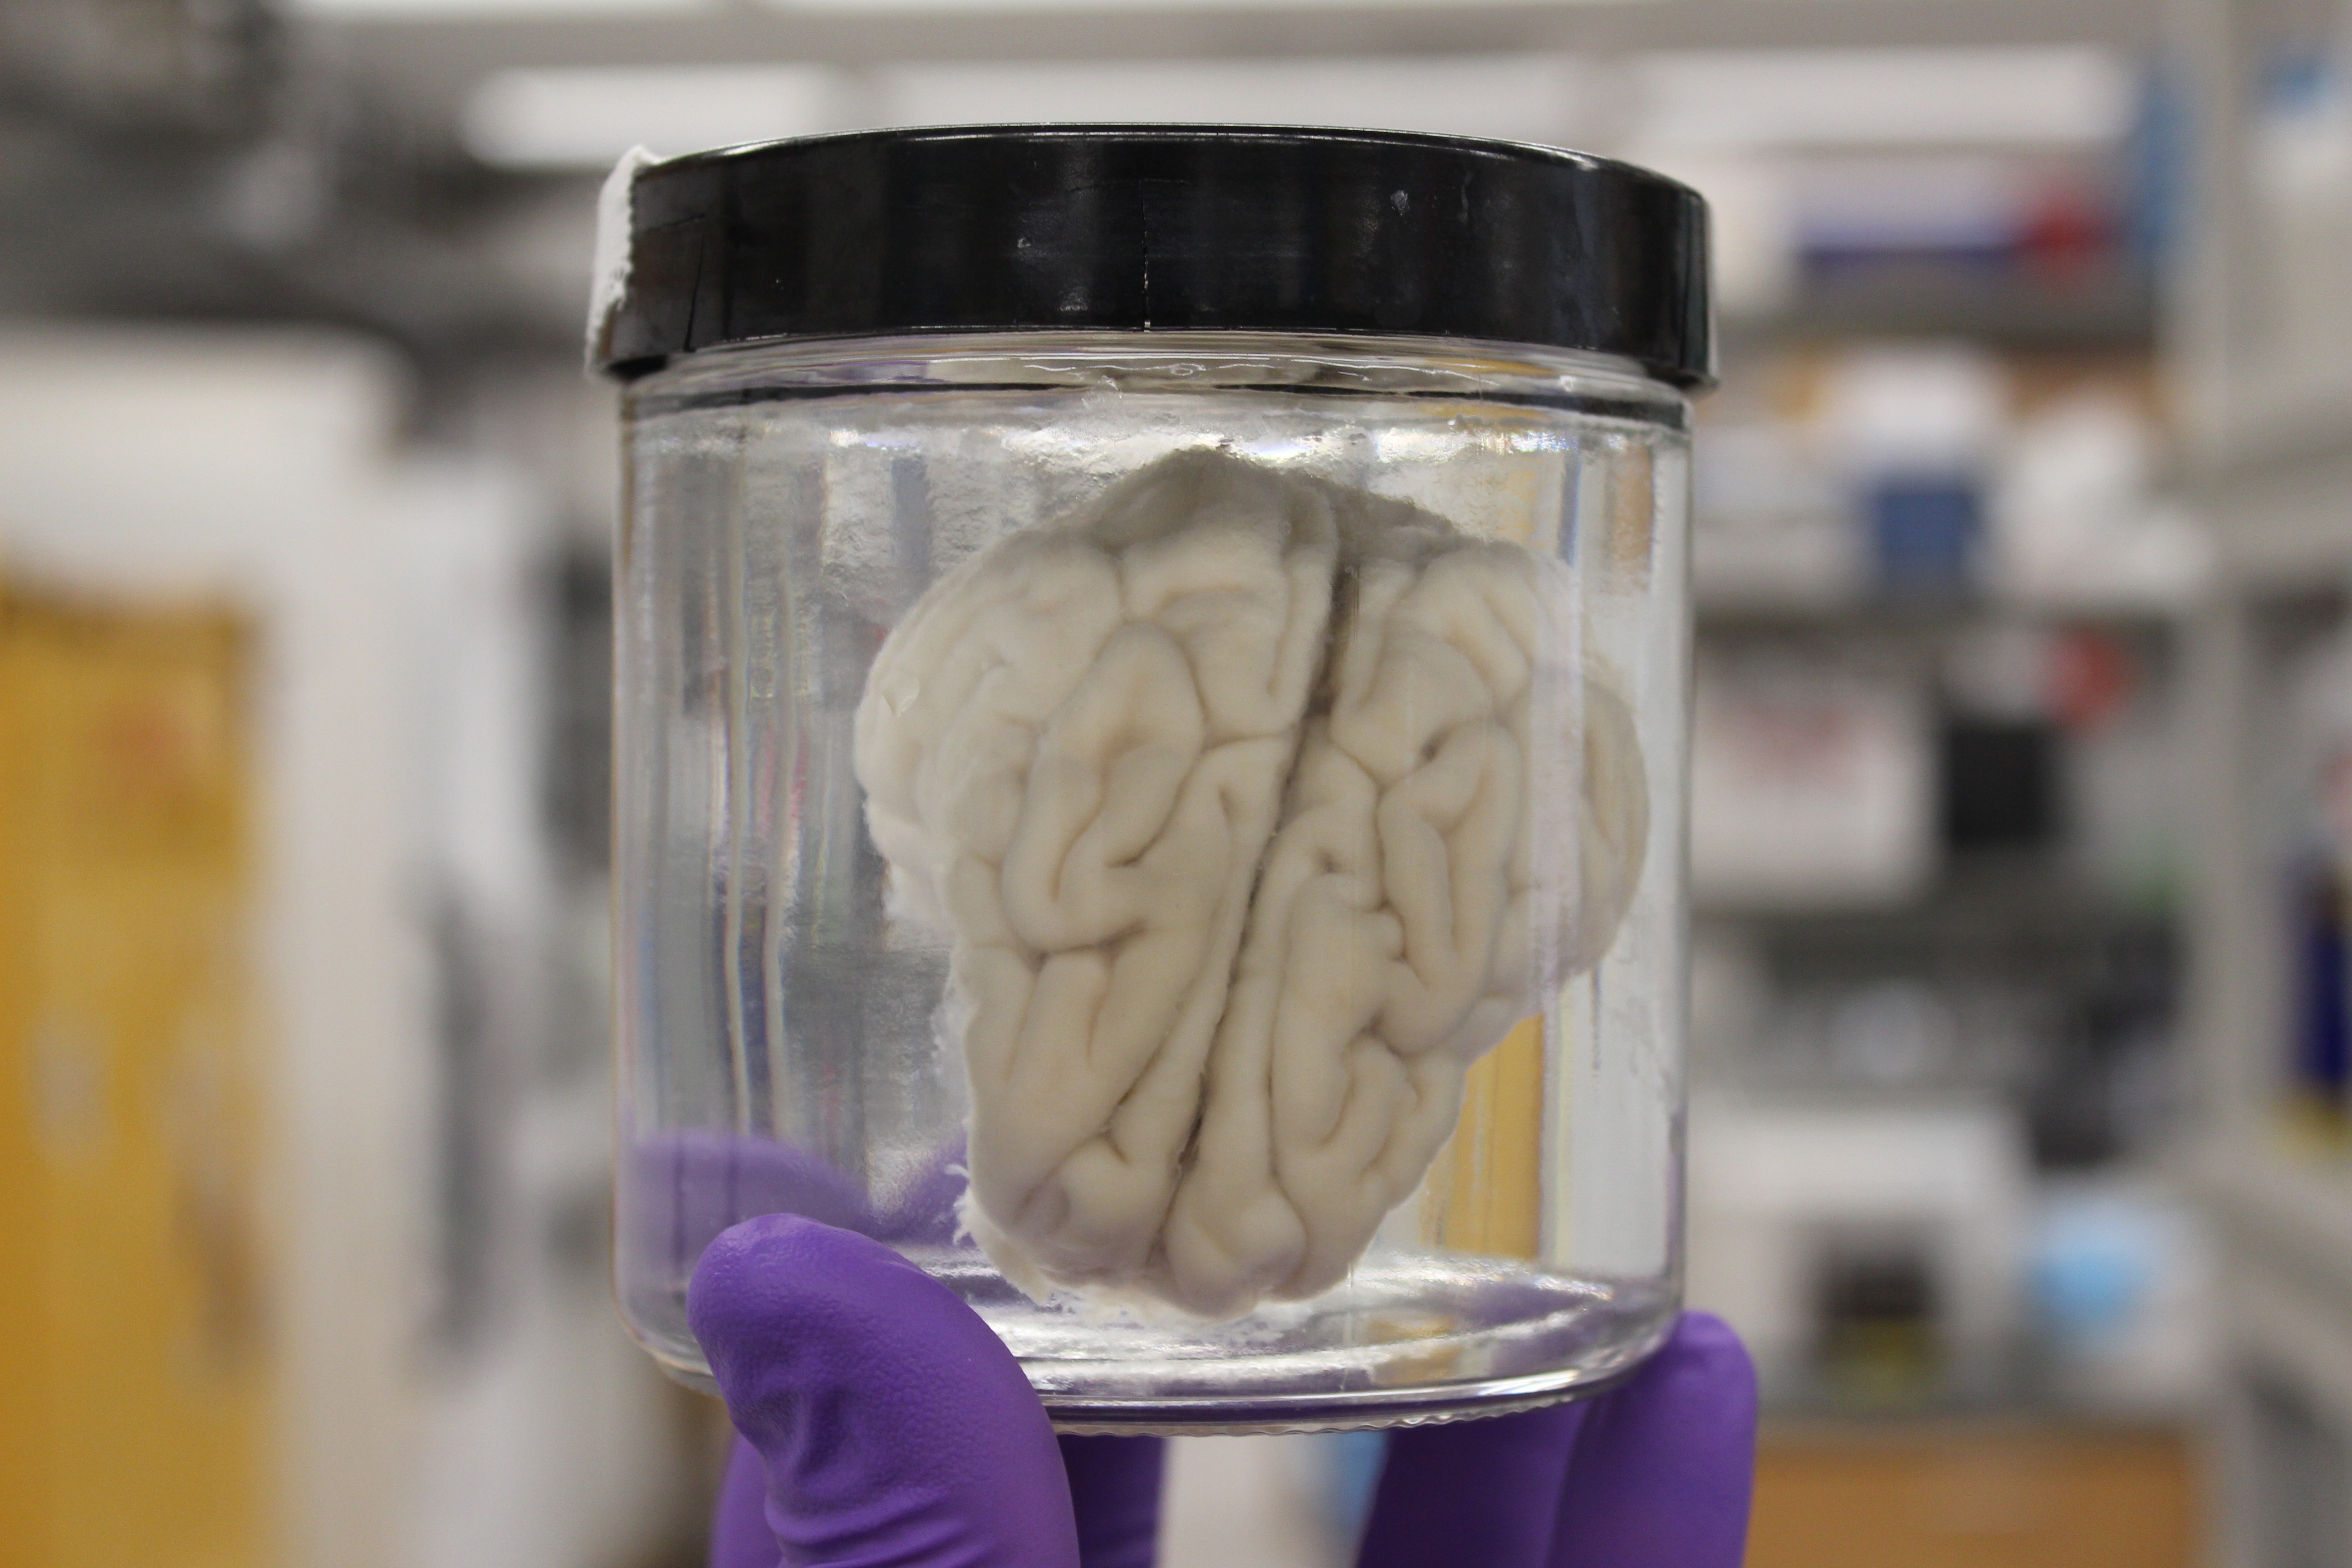 real human brain in a jar